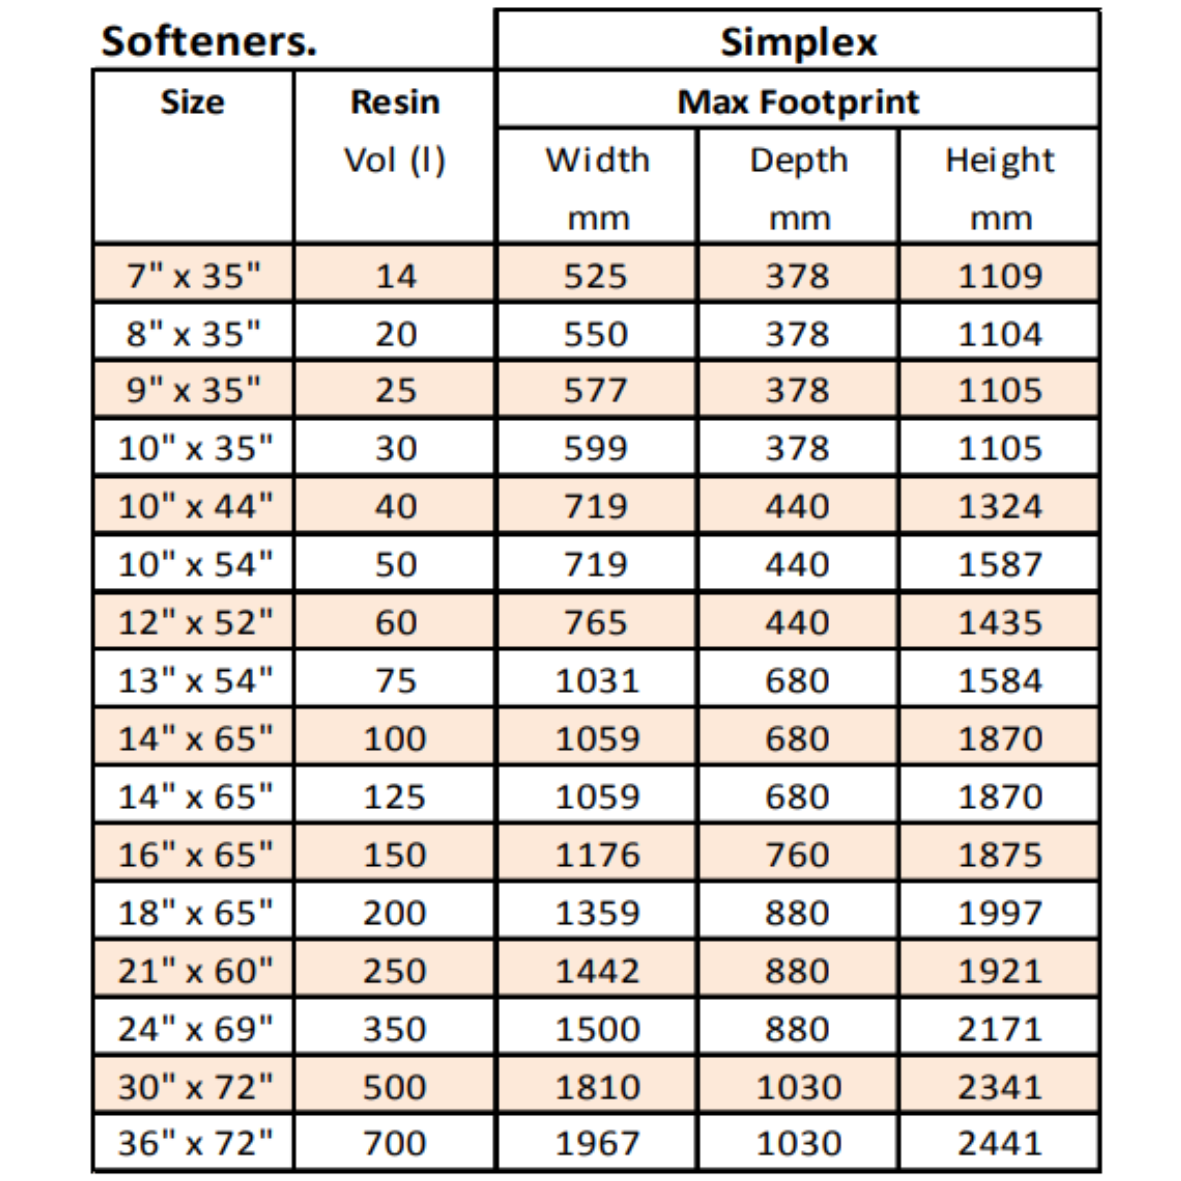 30" x 72", 500L, Simplex Water Softener, Autotrol 298 Time Controller, 17m³/h